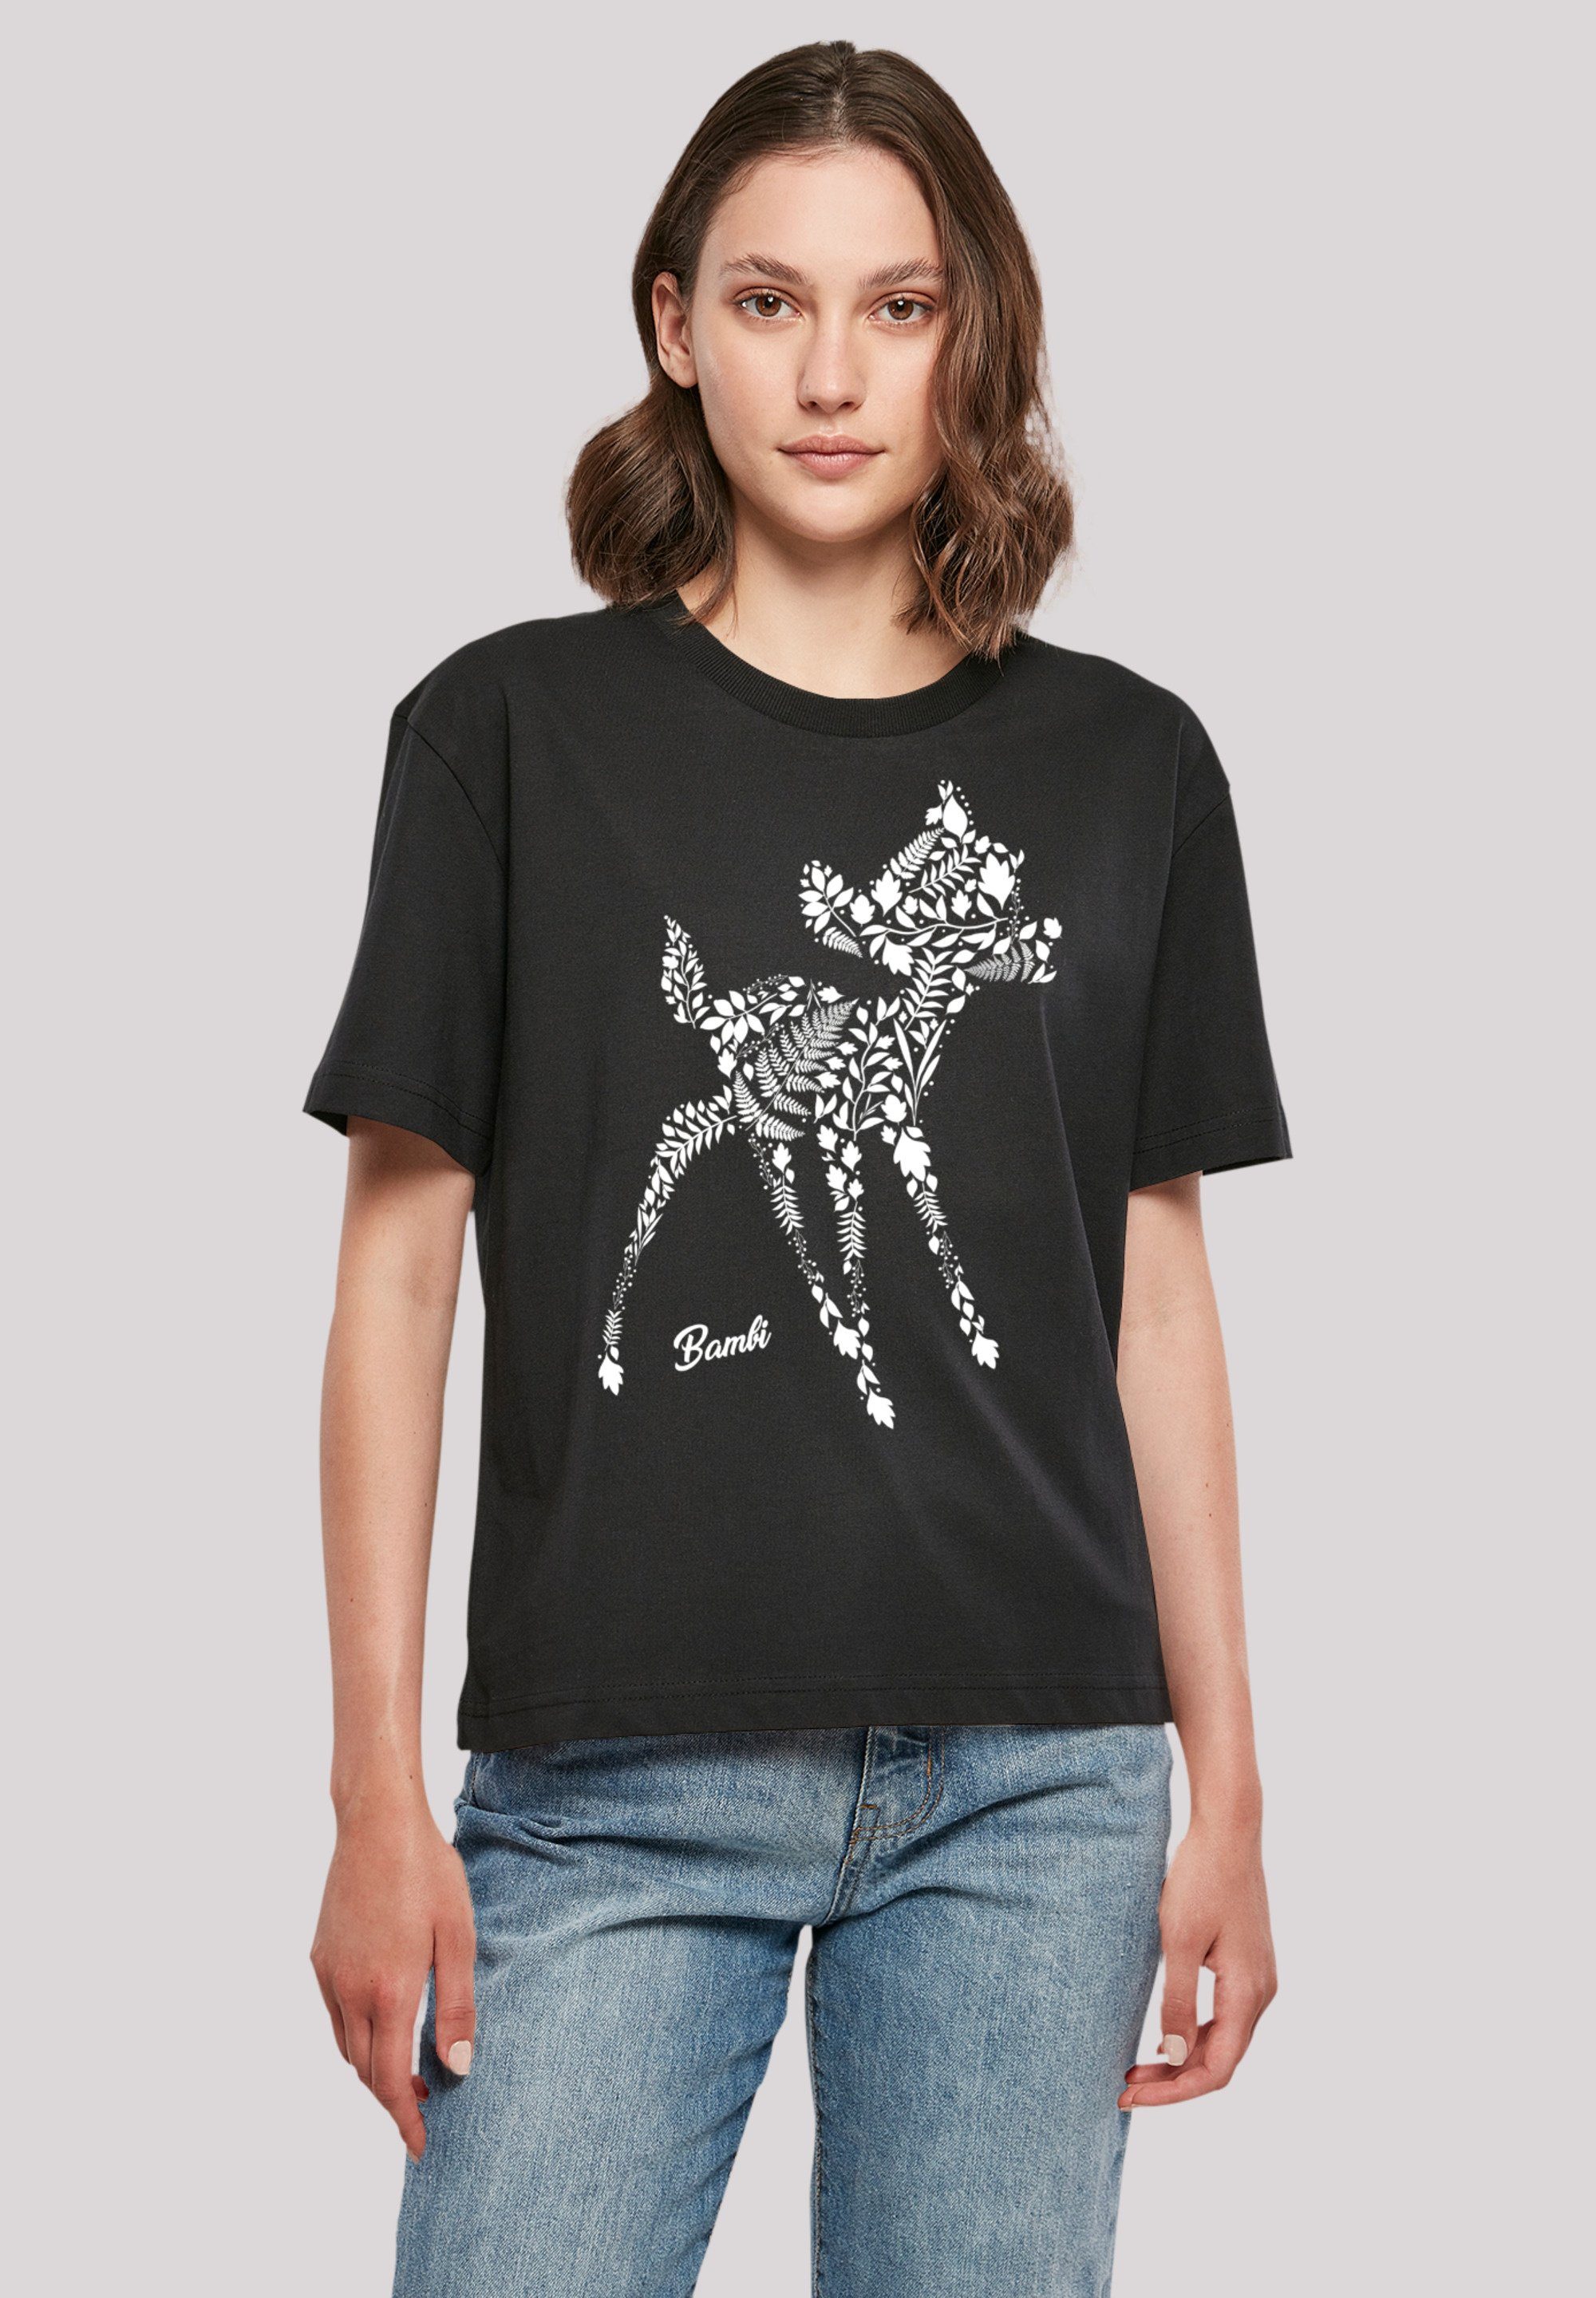 Förderungsberechtigung Bambi Mode online | » Bekleidung kaufen OTTO Bambi